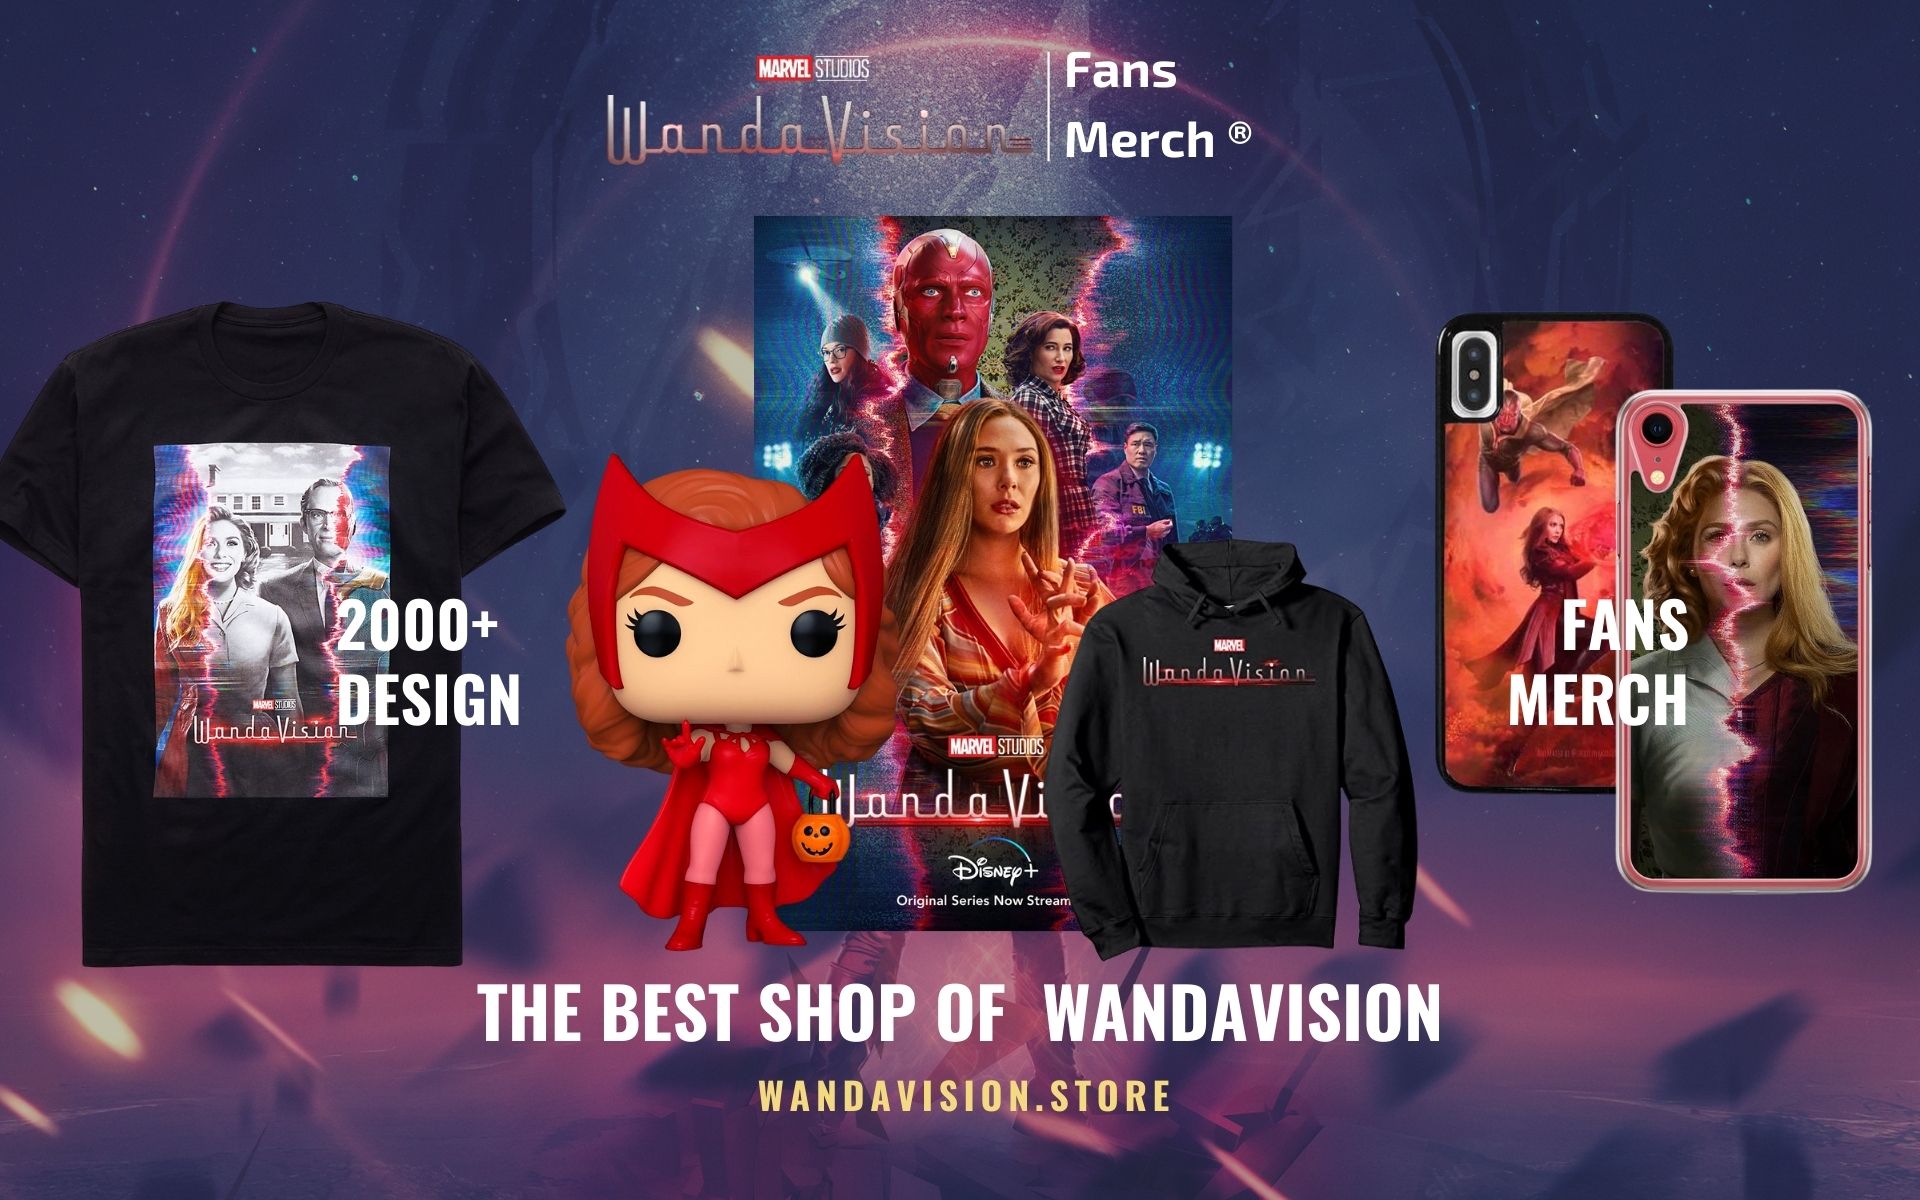 Wandavision Merch Store Web Banner 1 - WandaVision Merch